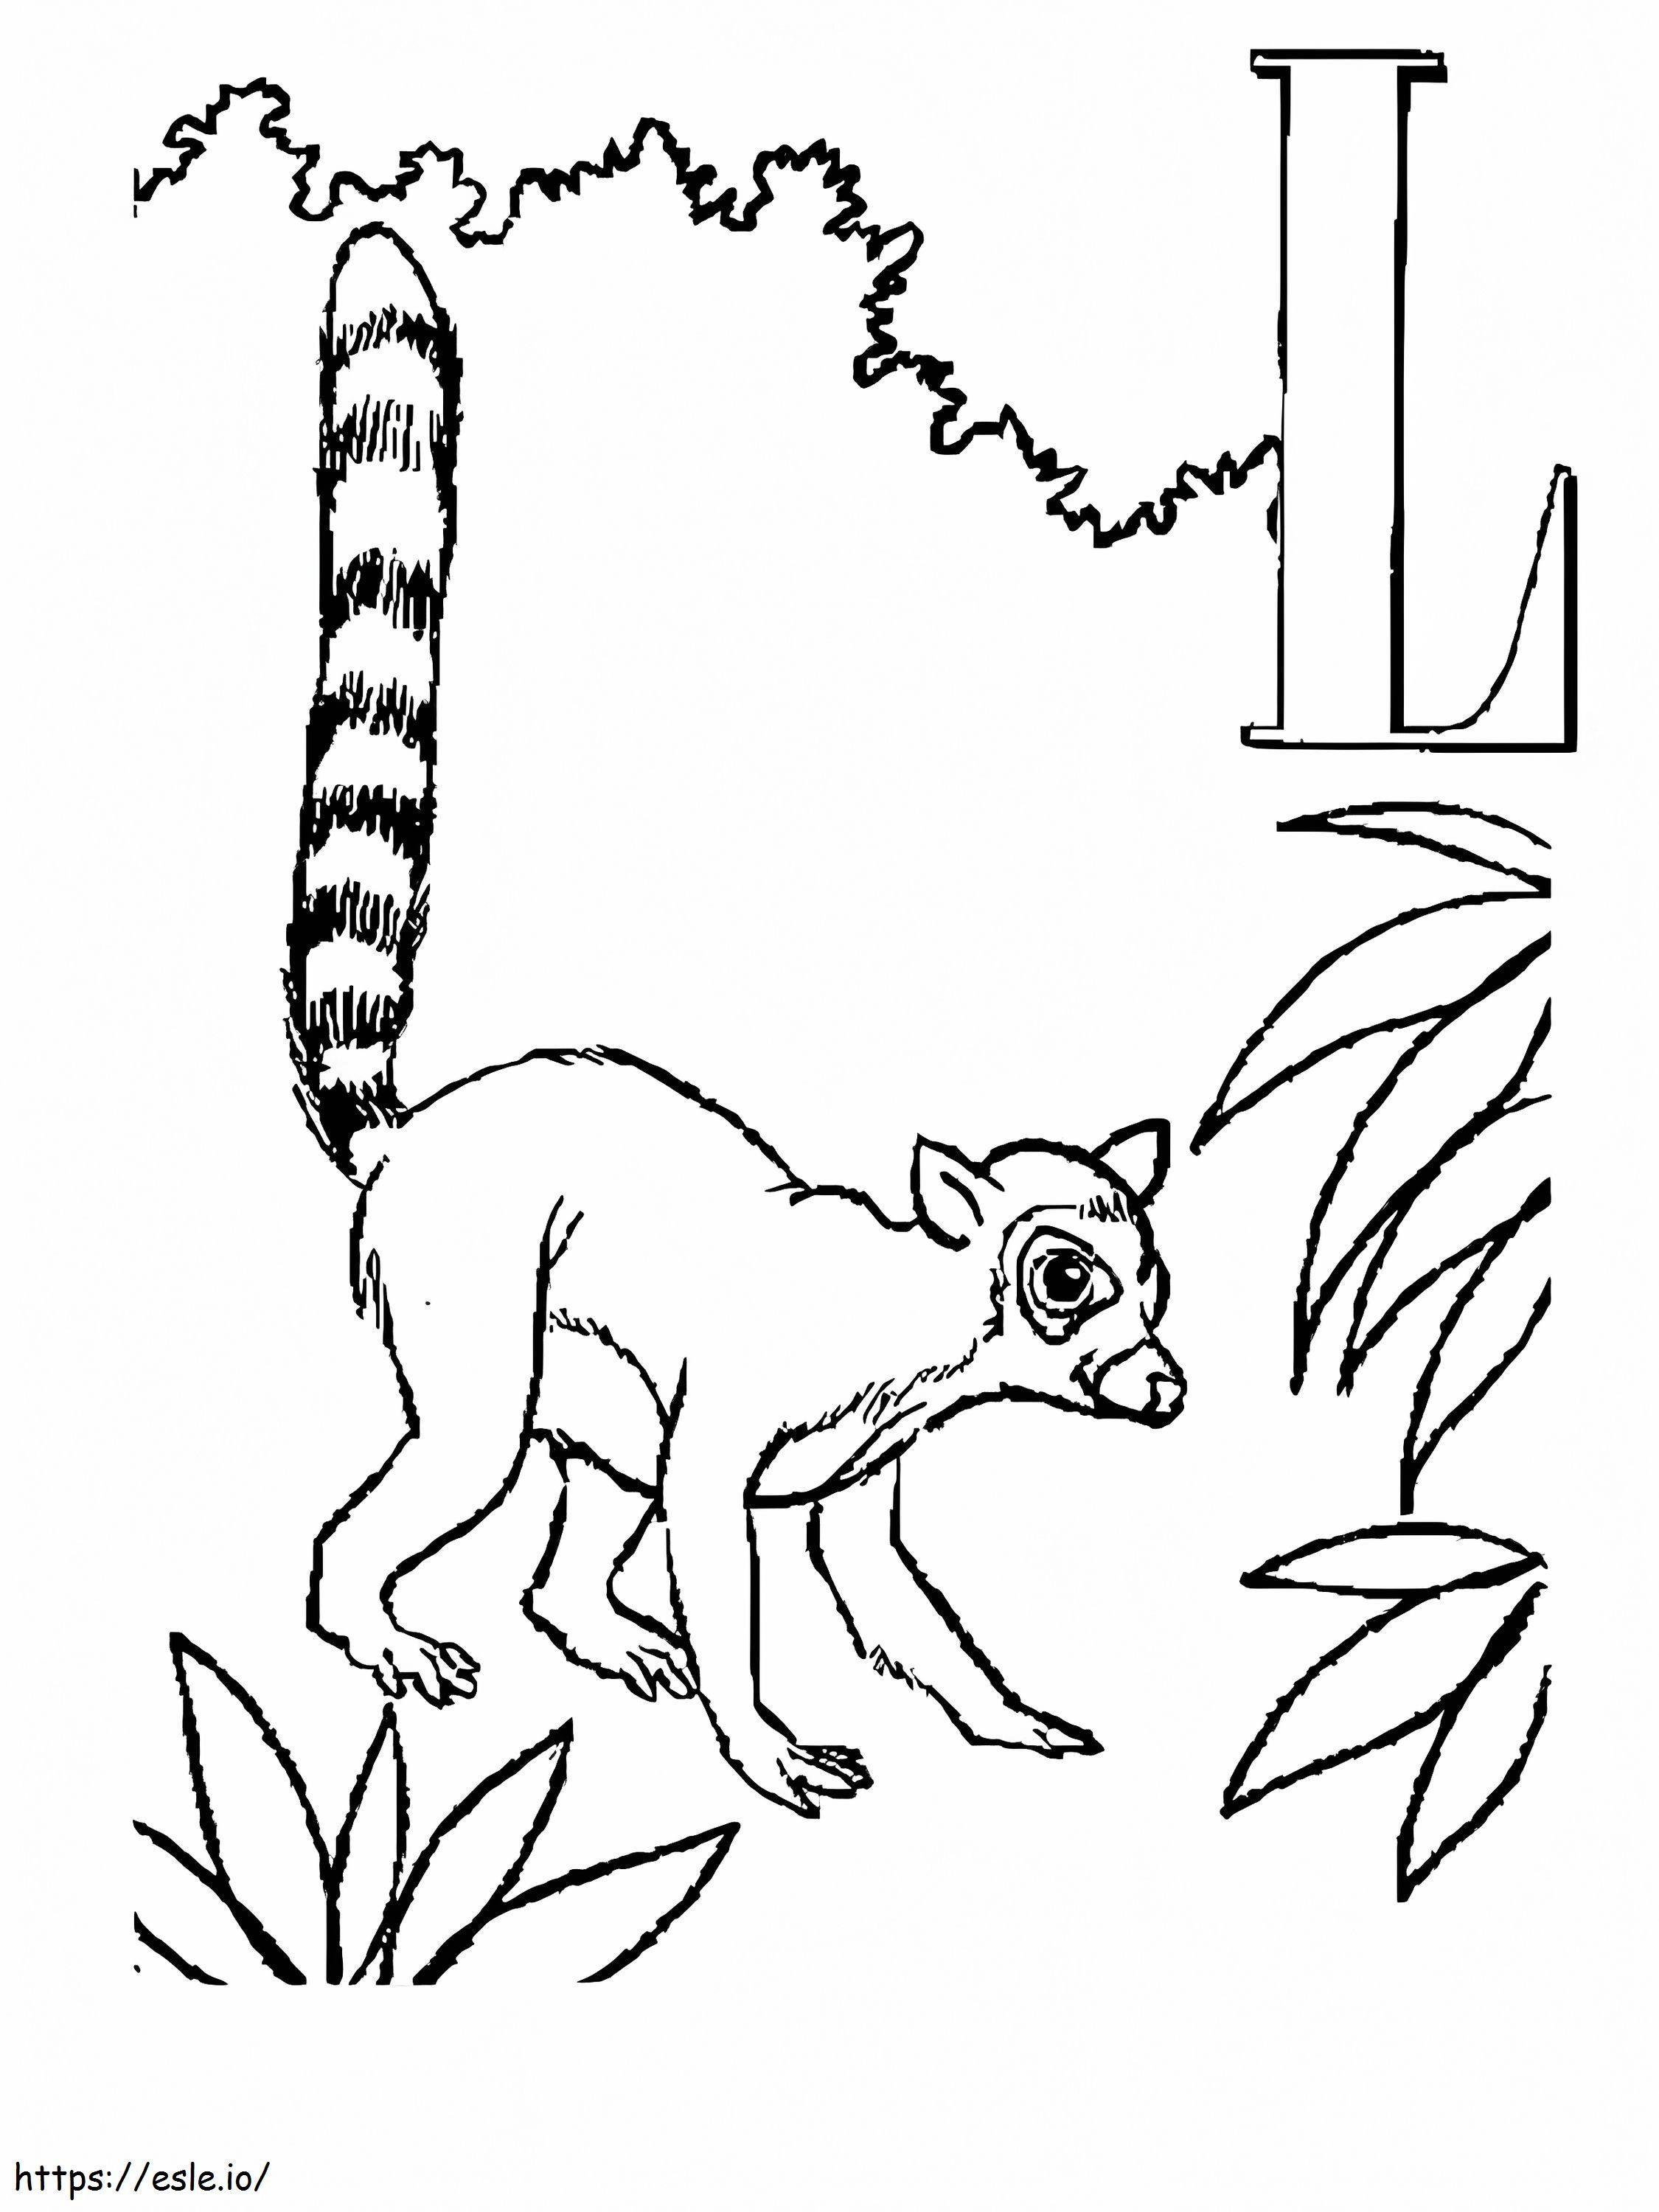 Lemur And Letter L coloring page